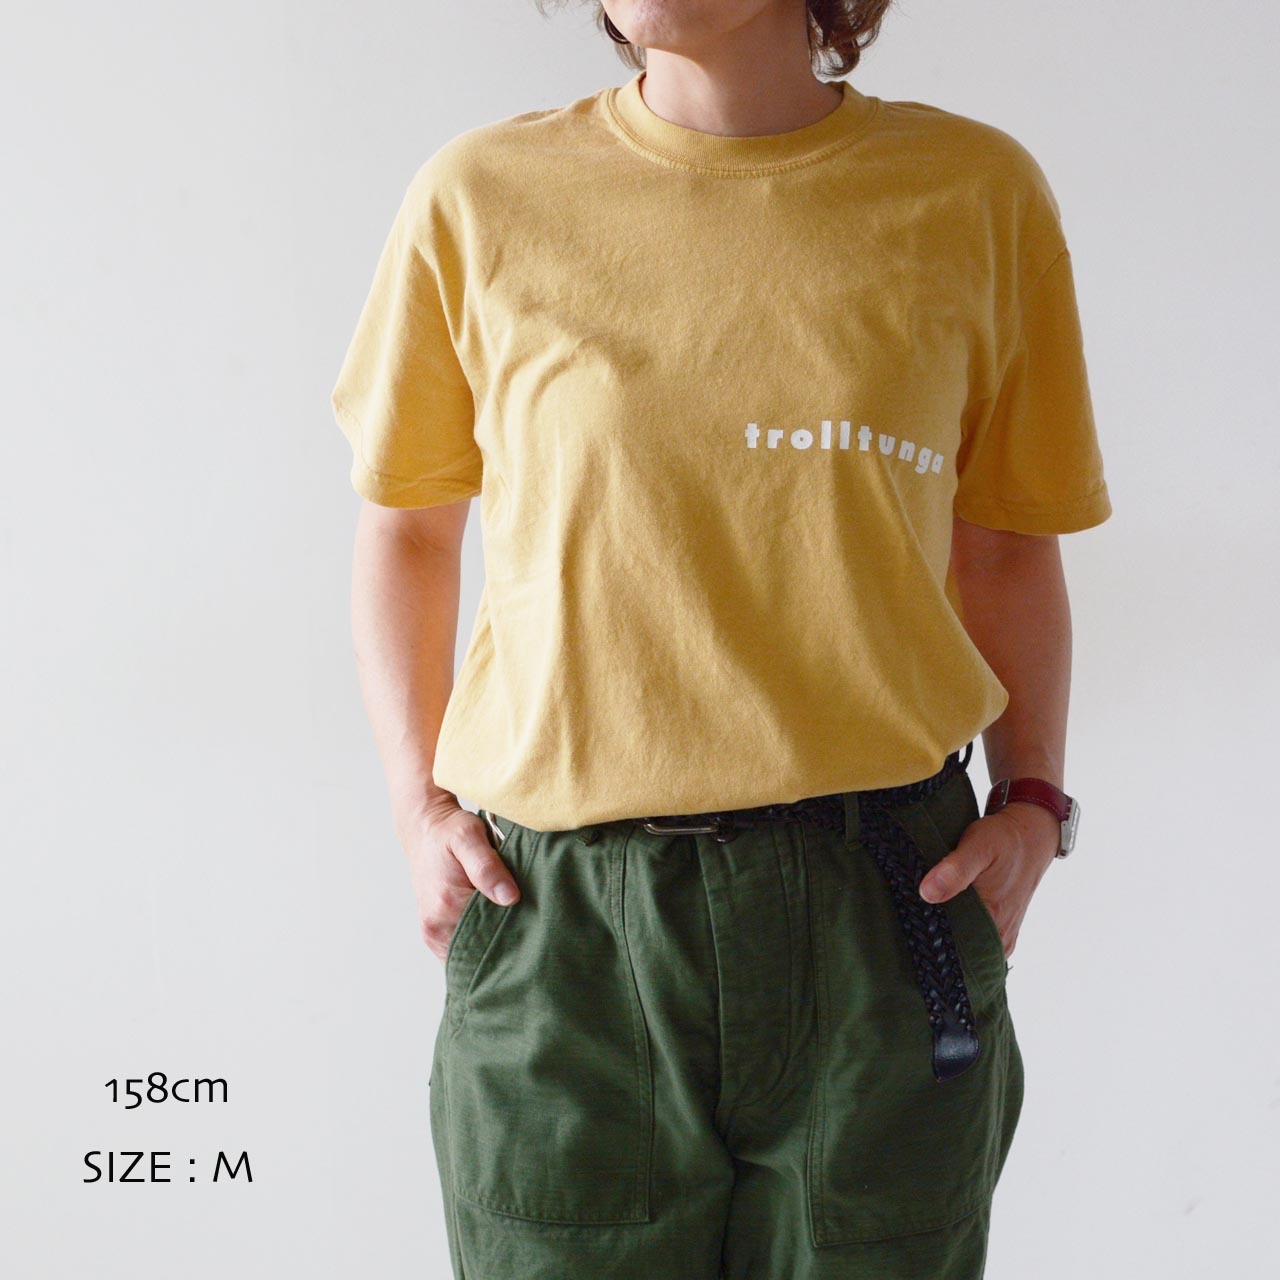 refalt original wear [リファルト オリジナルウエア] ヴィンテージ風ビッグTシャツ「trolltunga tee」 [tee-Tro1101] _f0051306_10124085.jpg